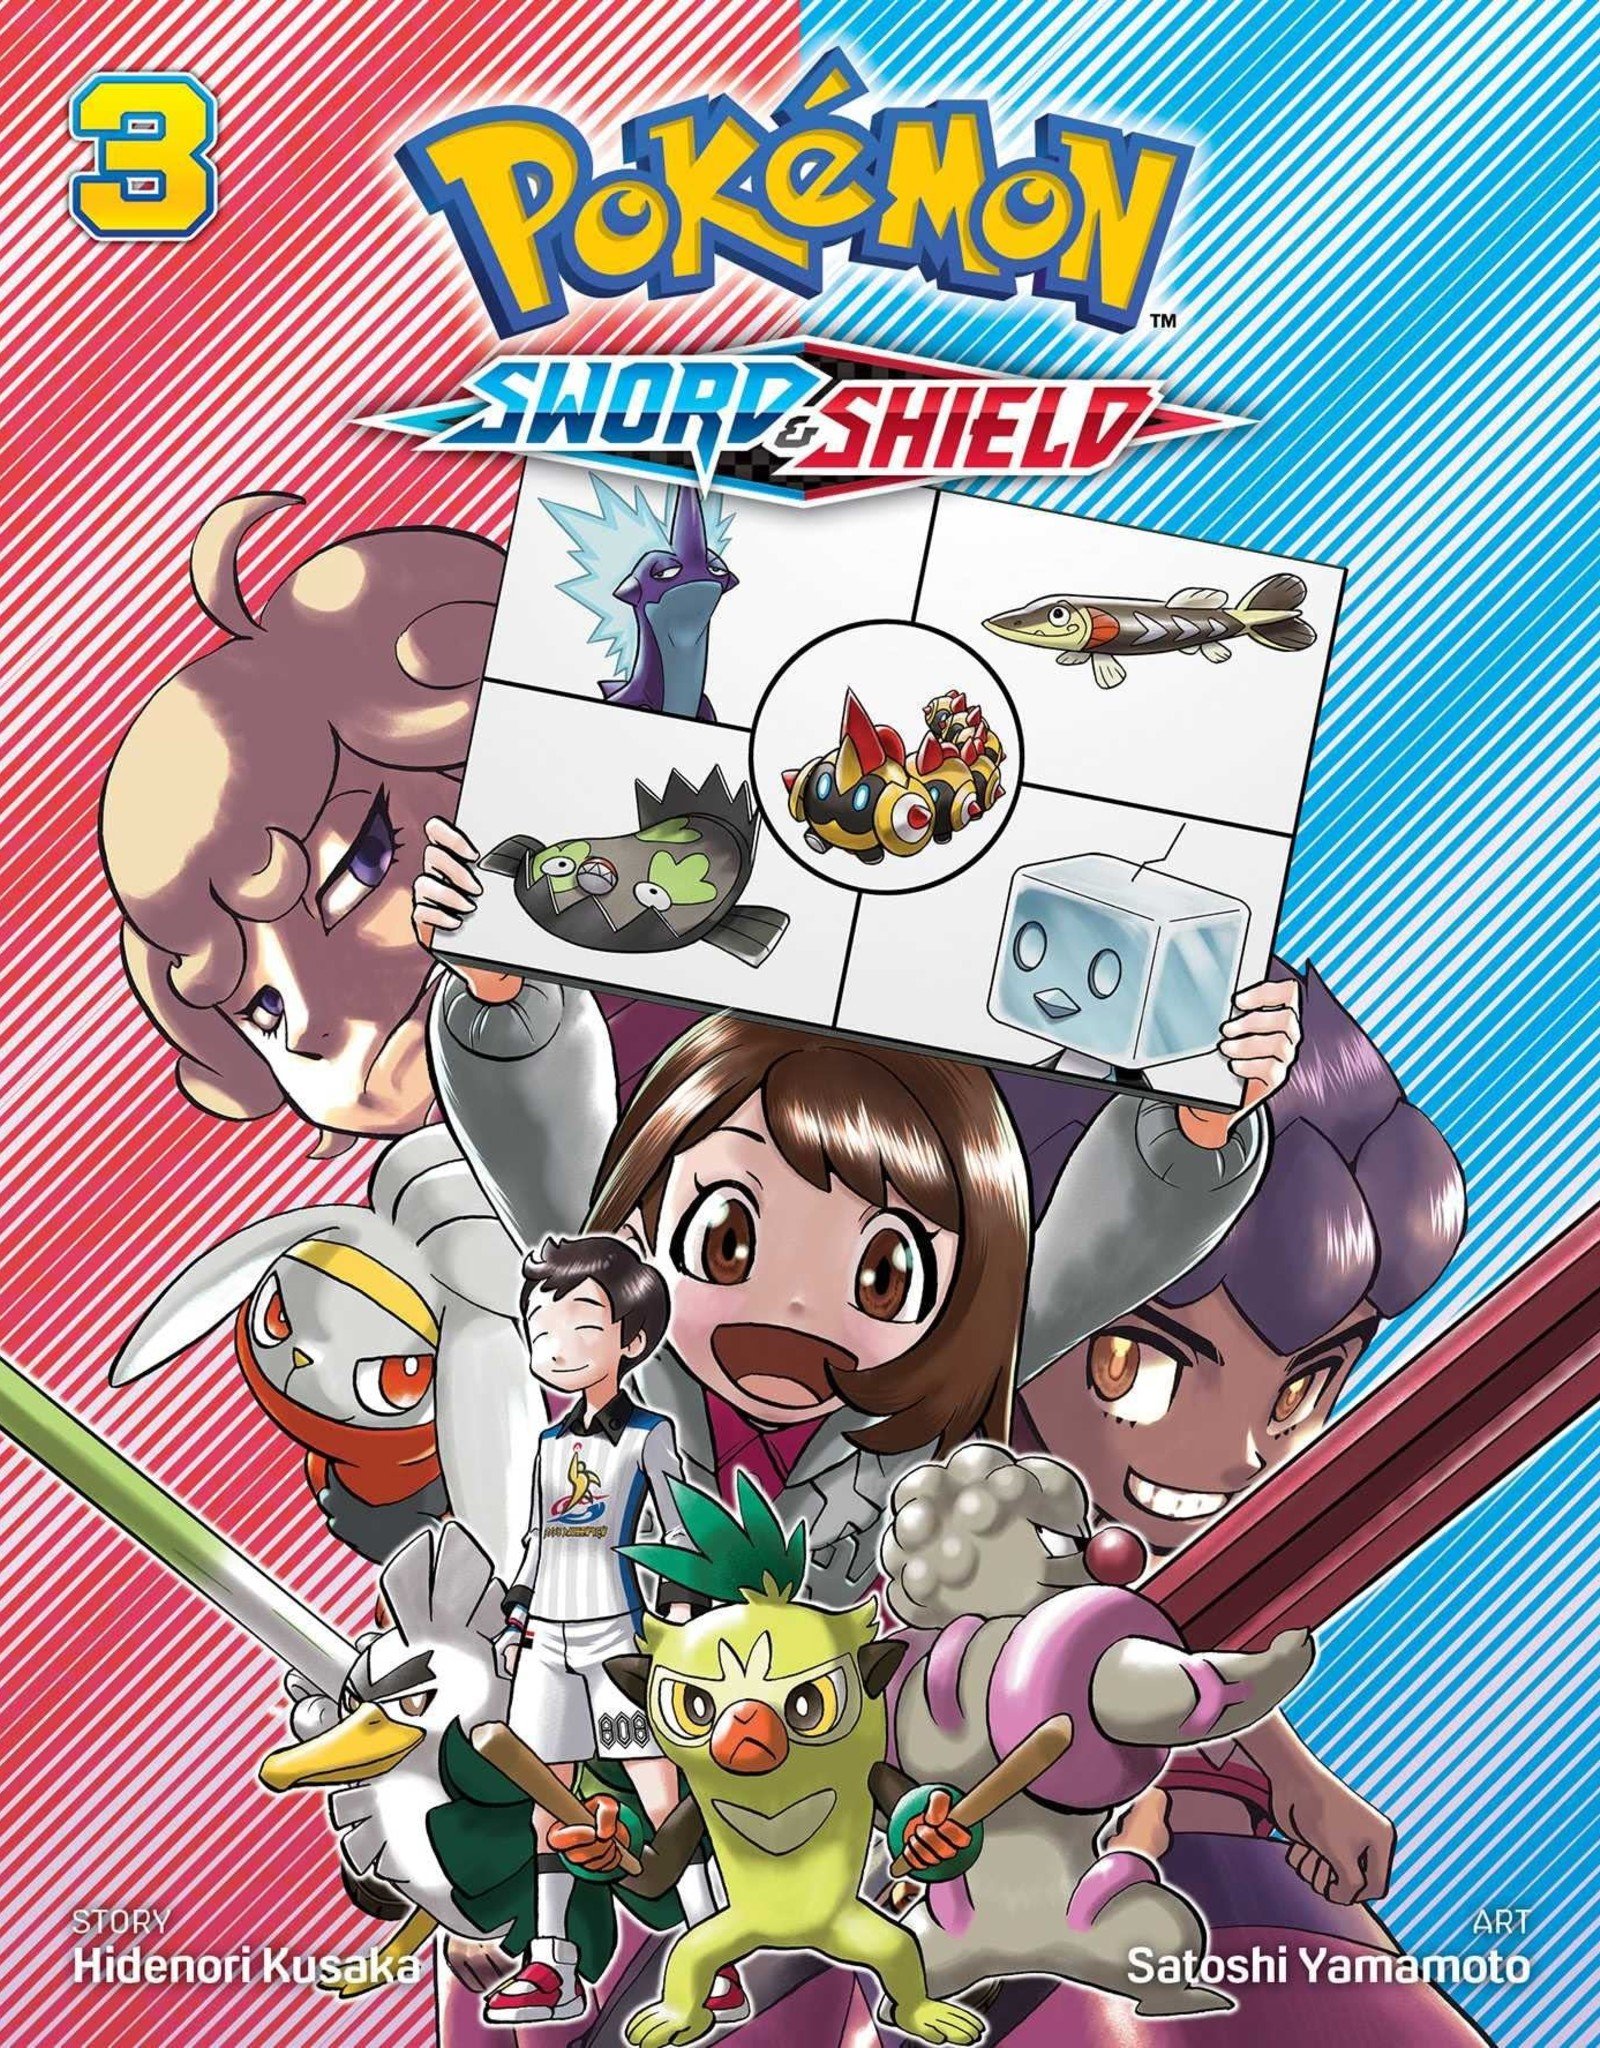 Pokémon: Sword & Shield, Vol. 3